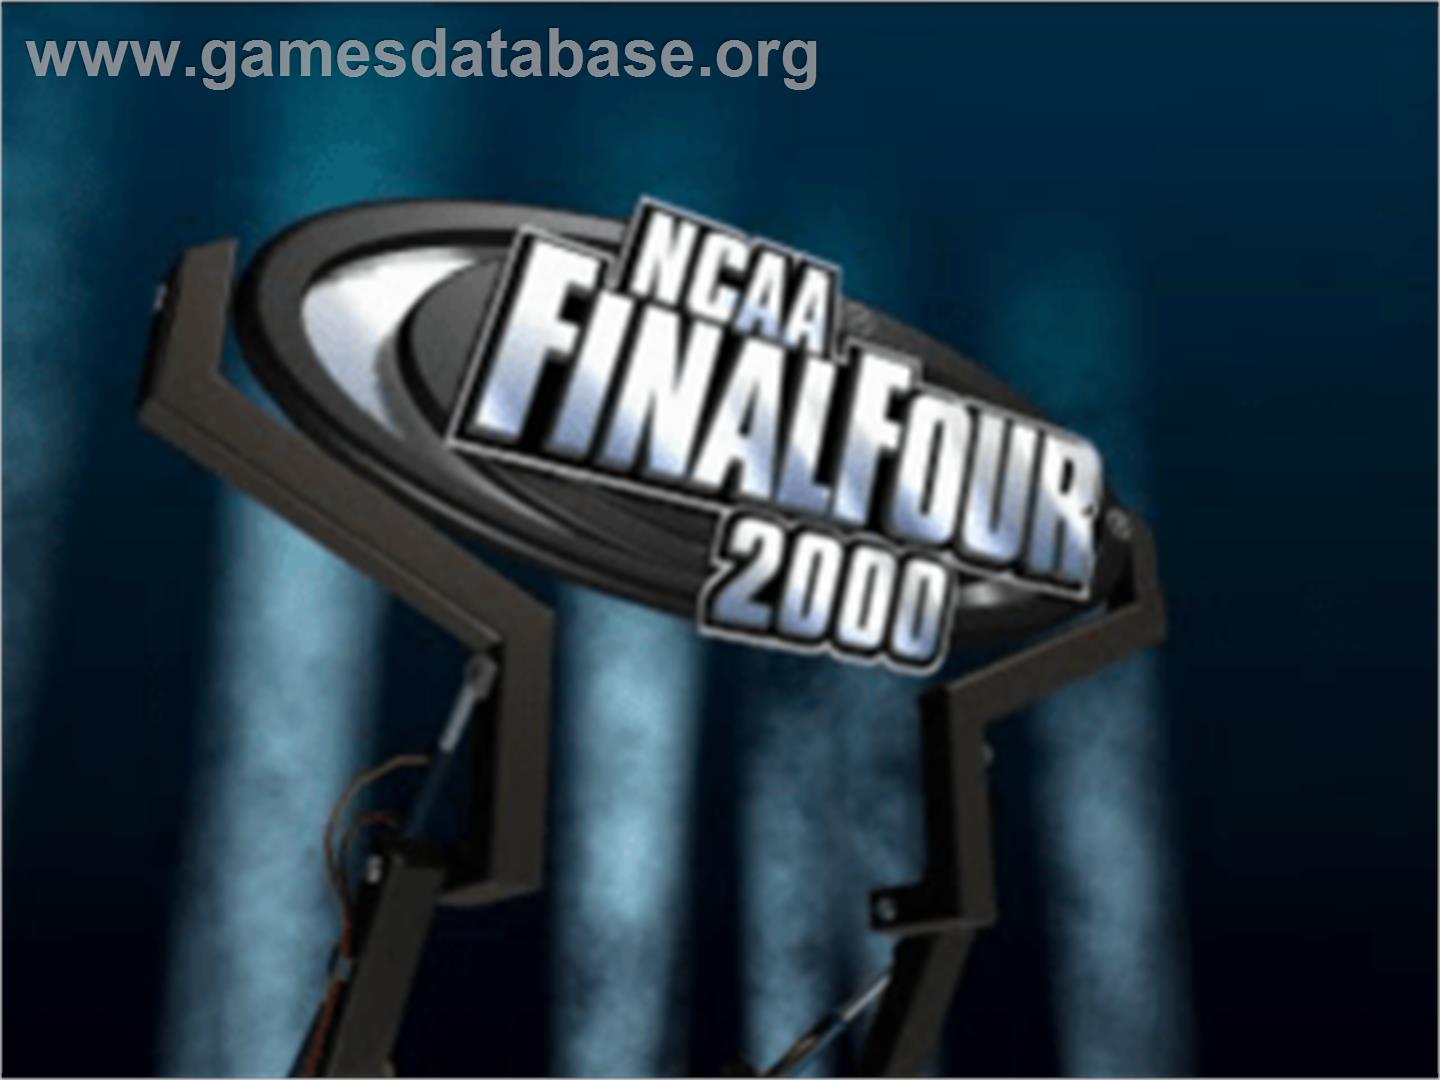 NCAA Final Four 2000 - Sony Playstation - Artwork - Title Screen